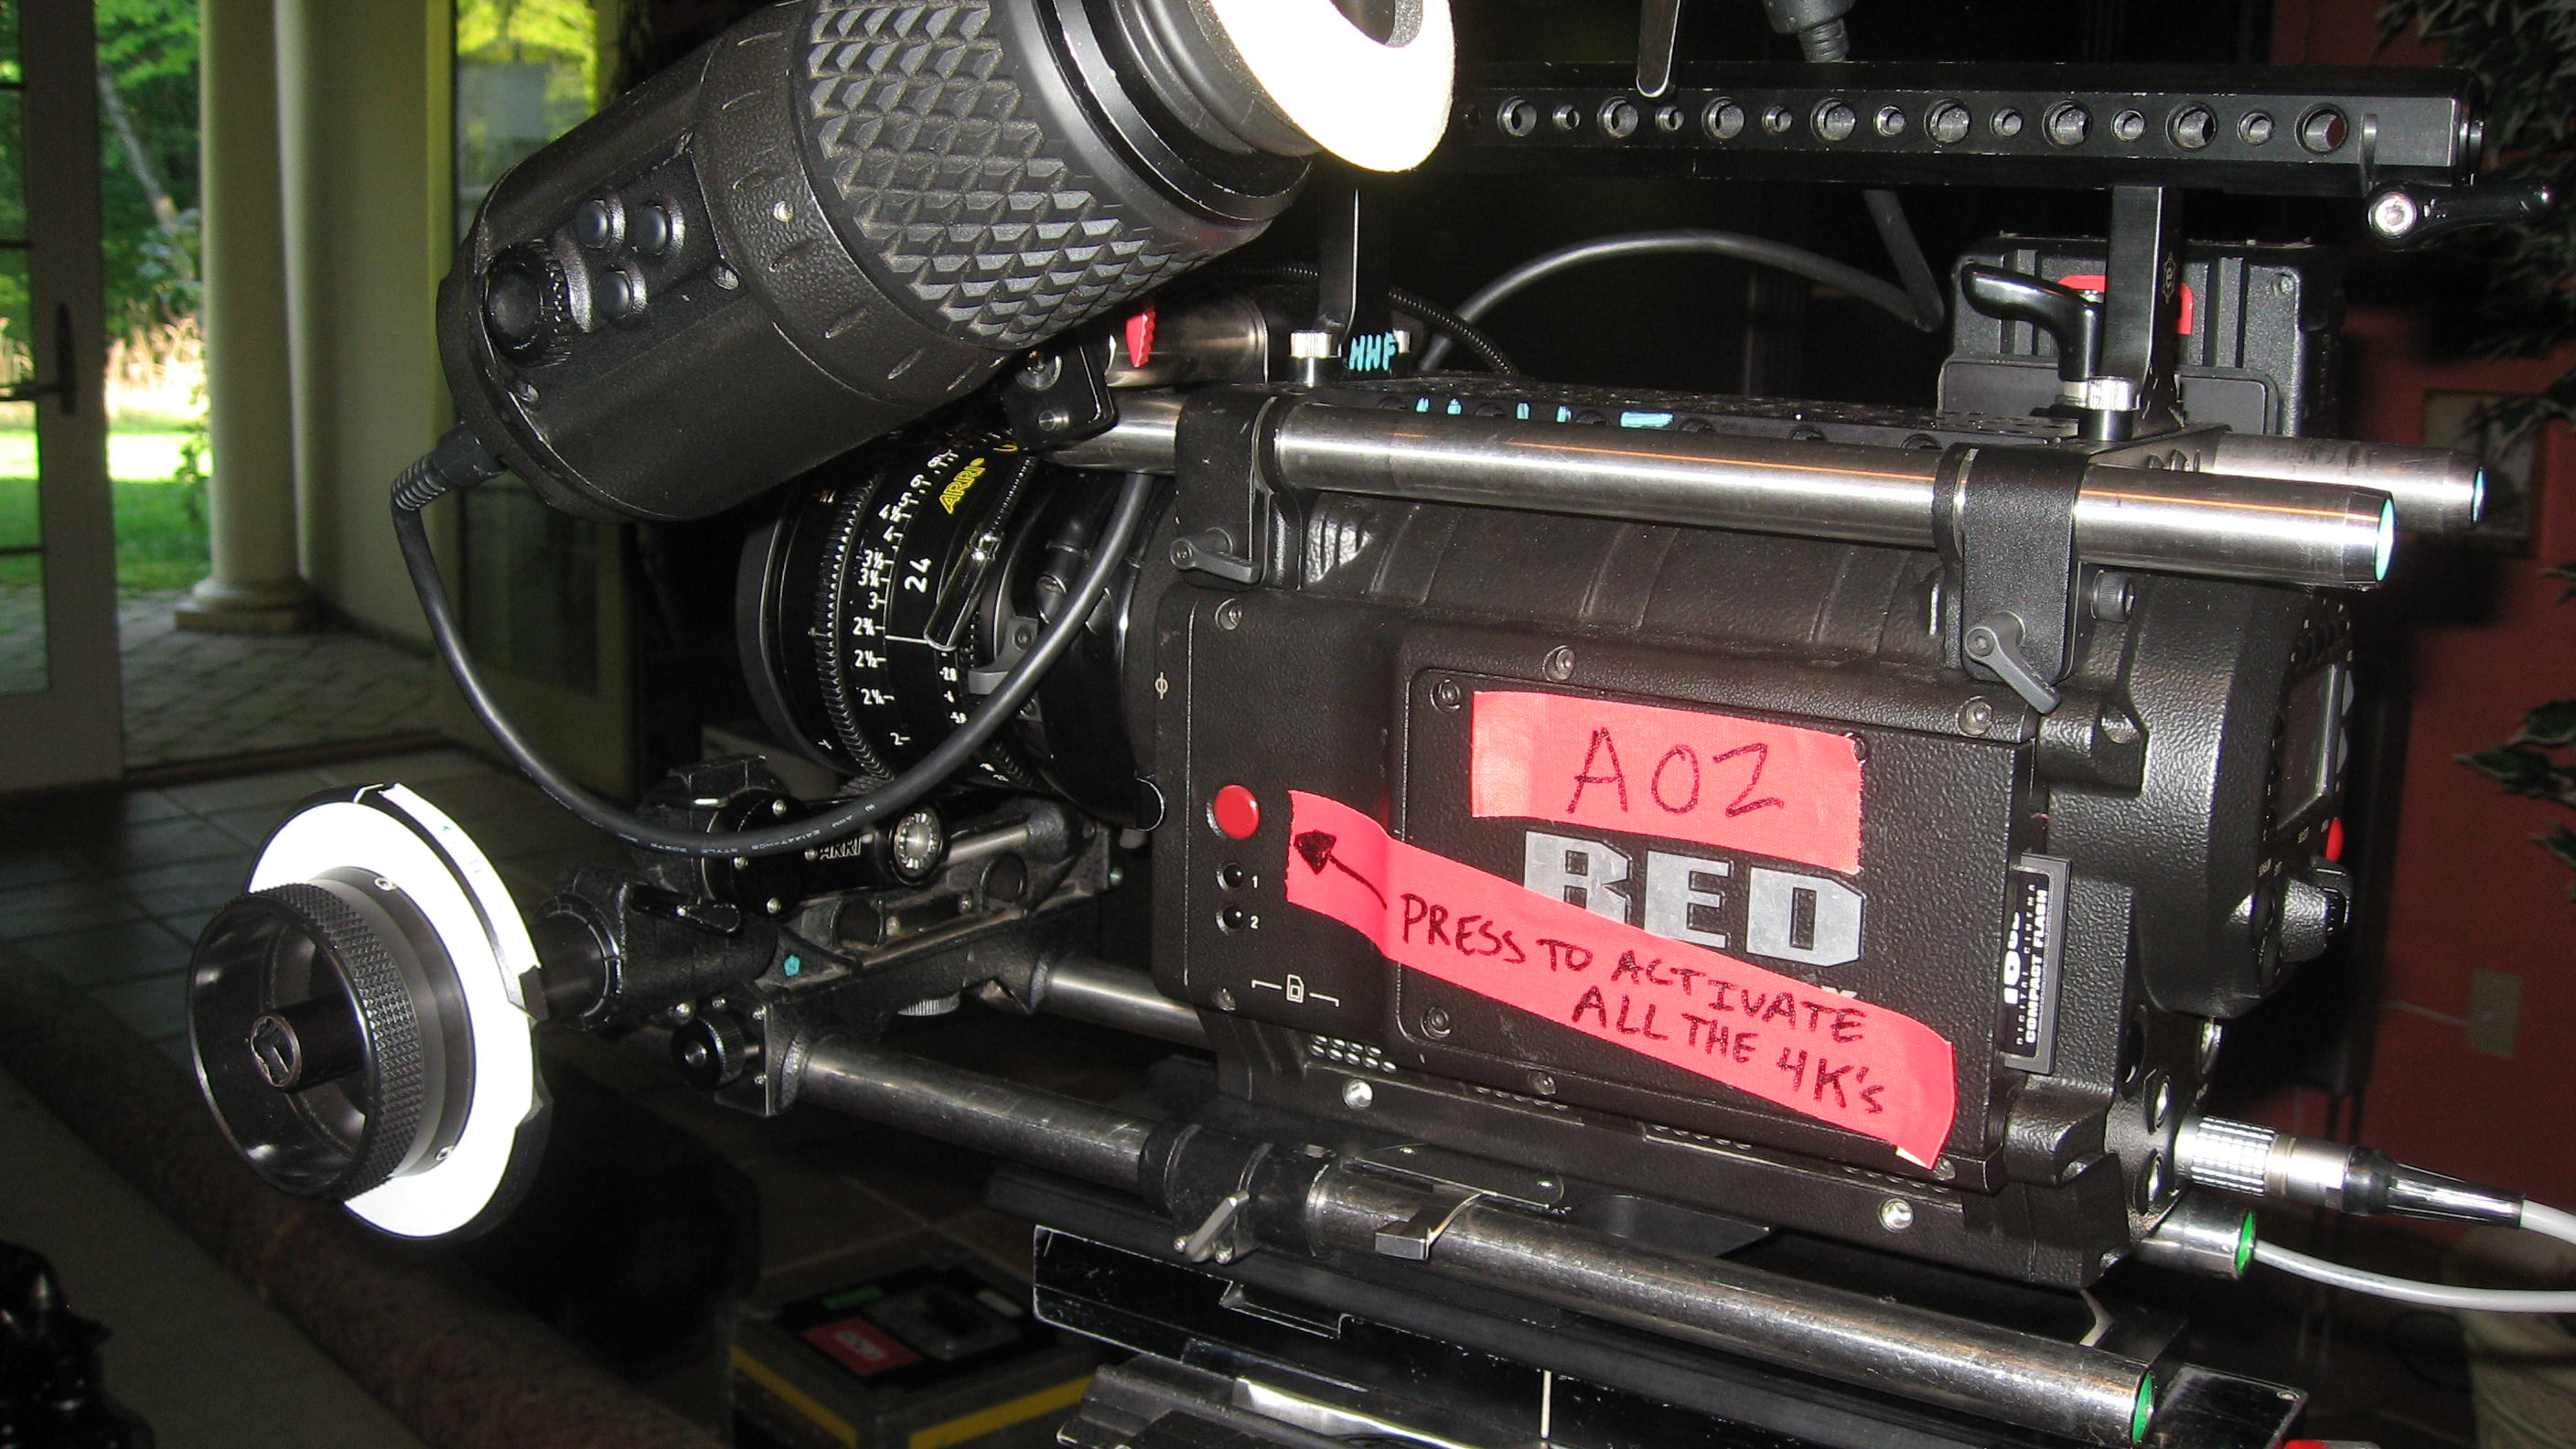 big red one camera